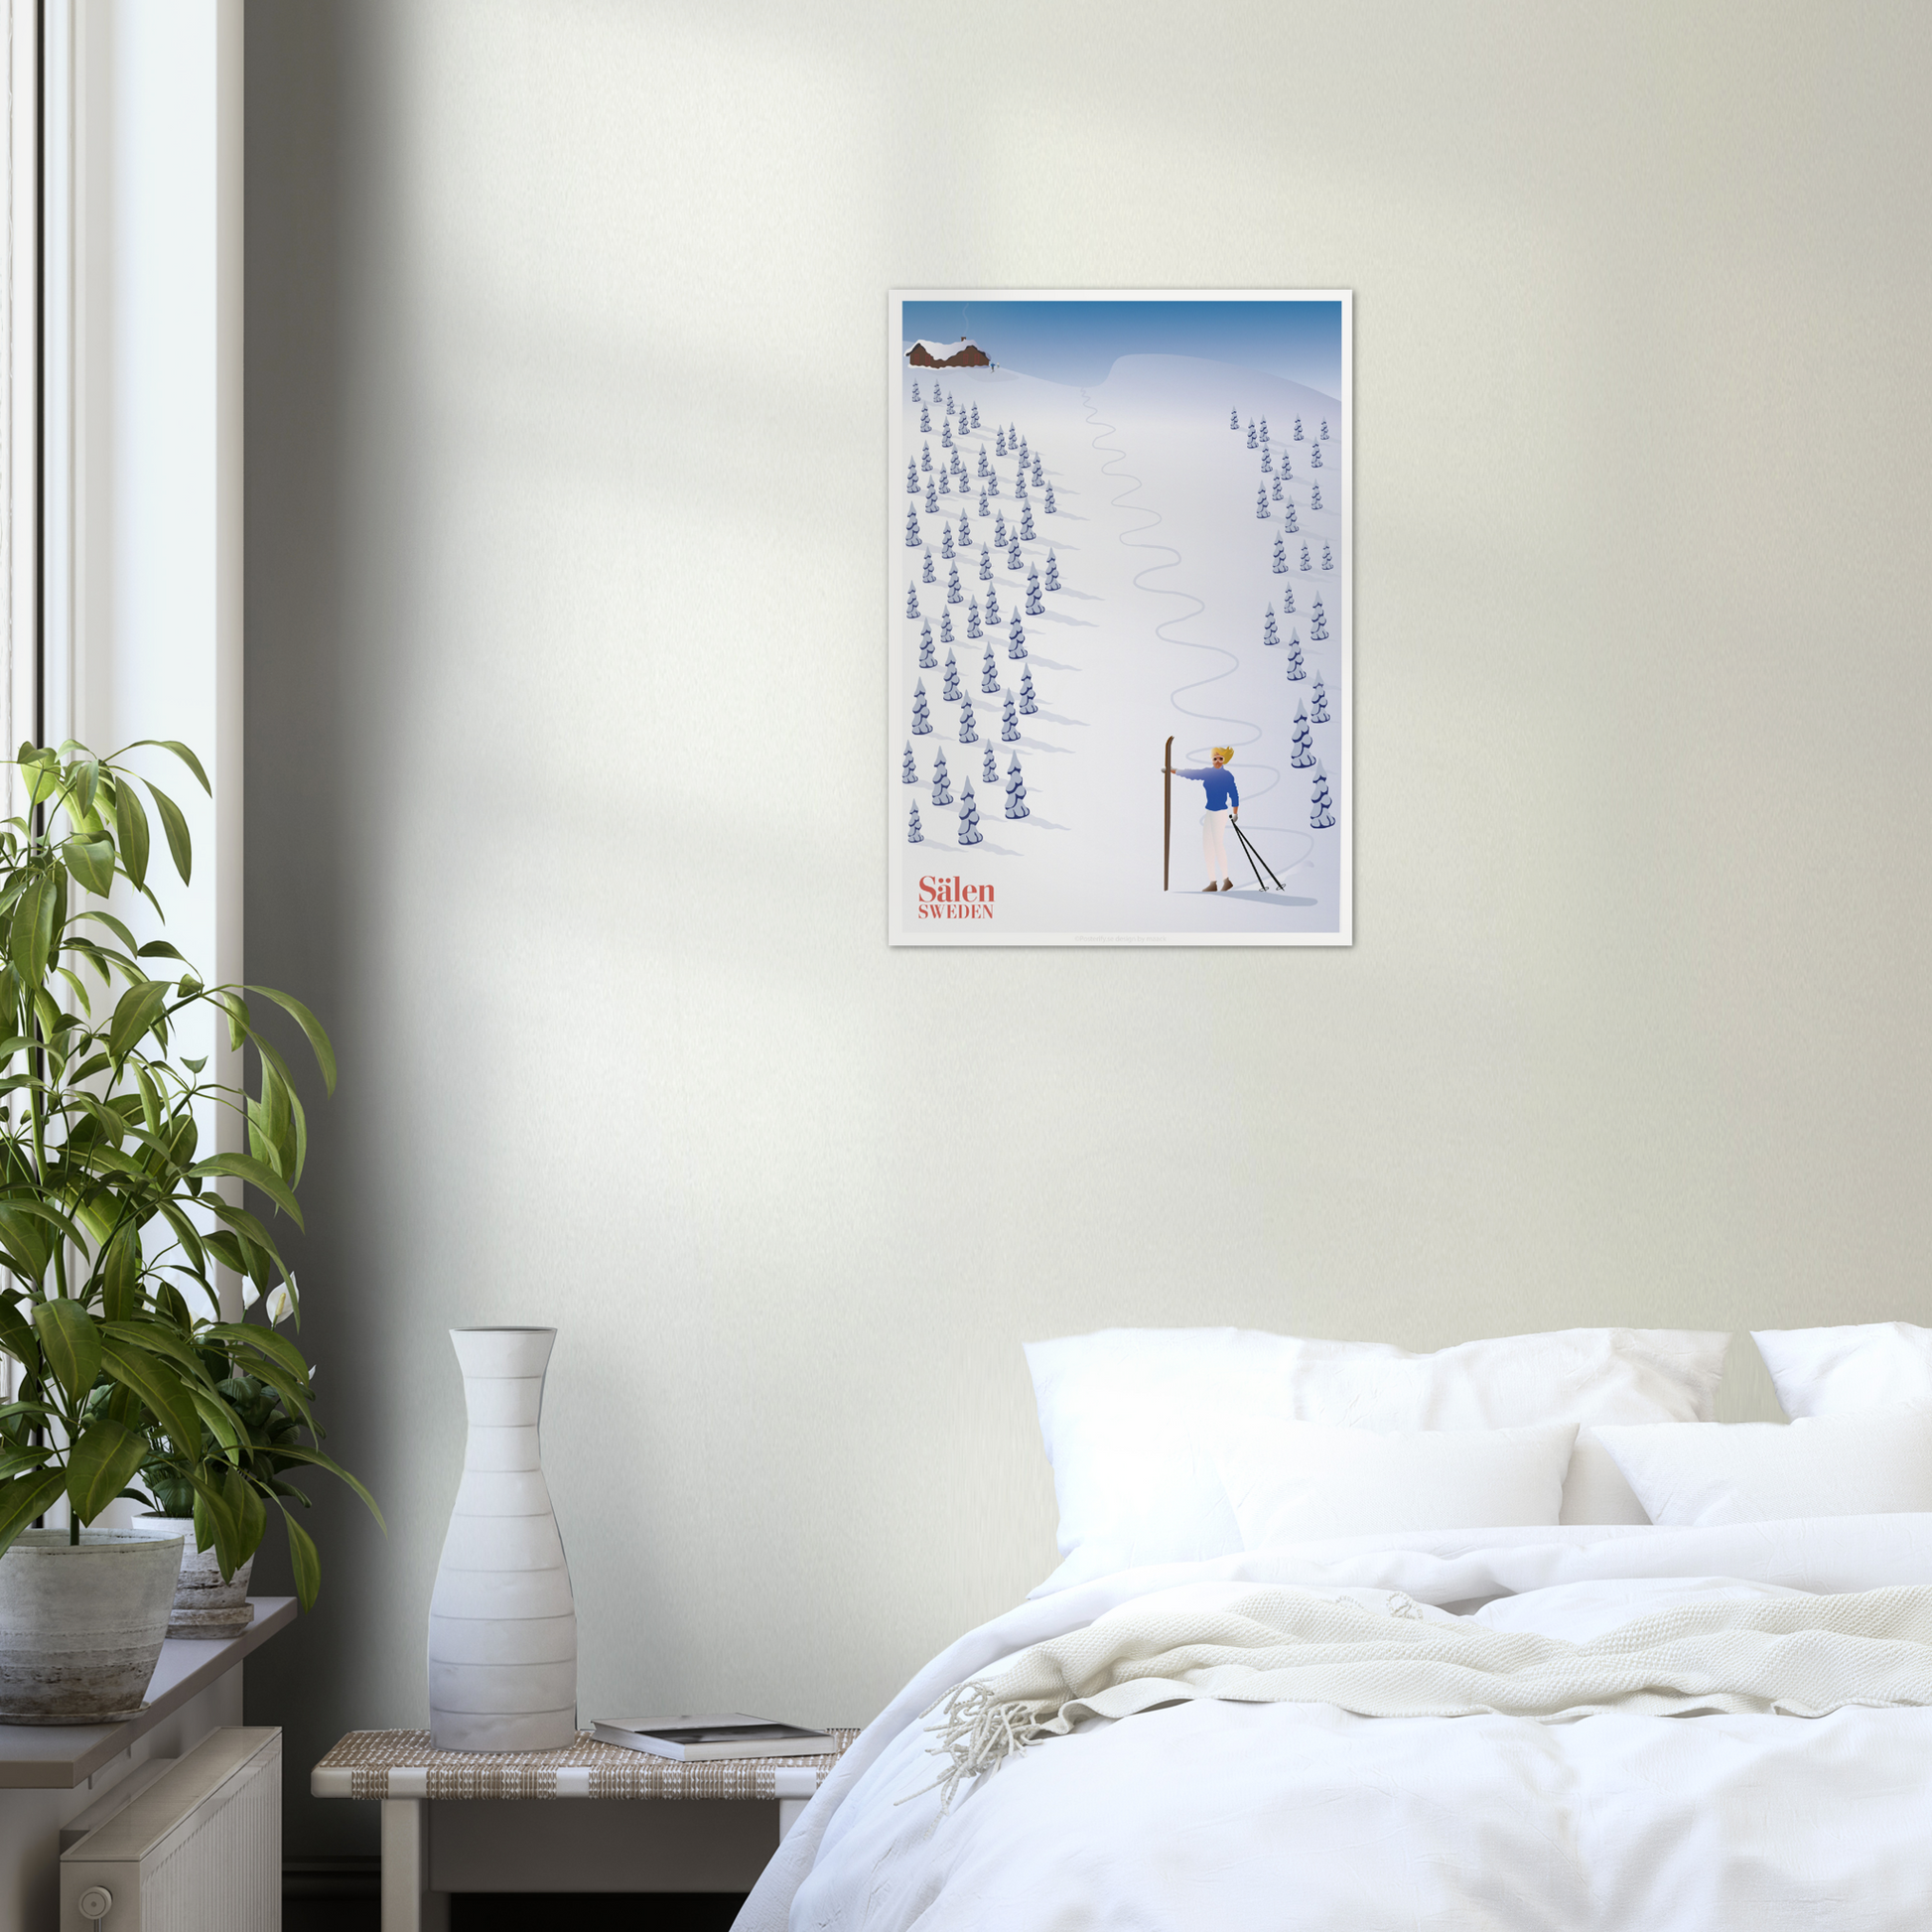 Sälen, Sweden, by Posterify Design, Poster Print on Premium Matte Paper - Posterify